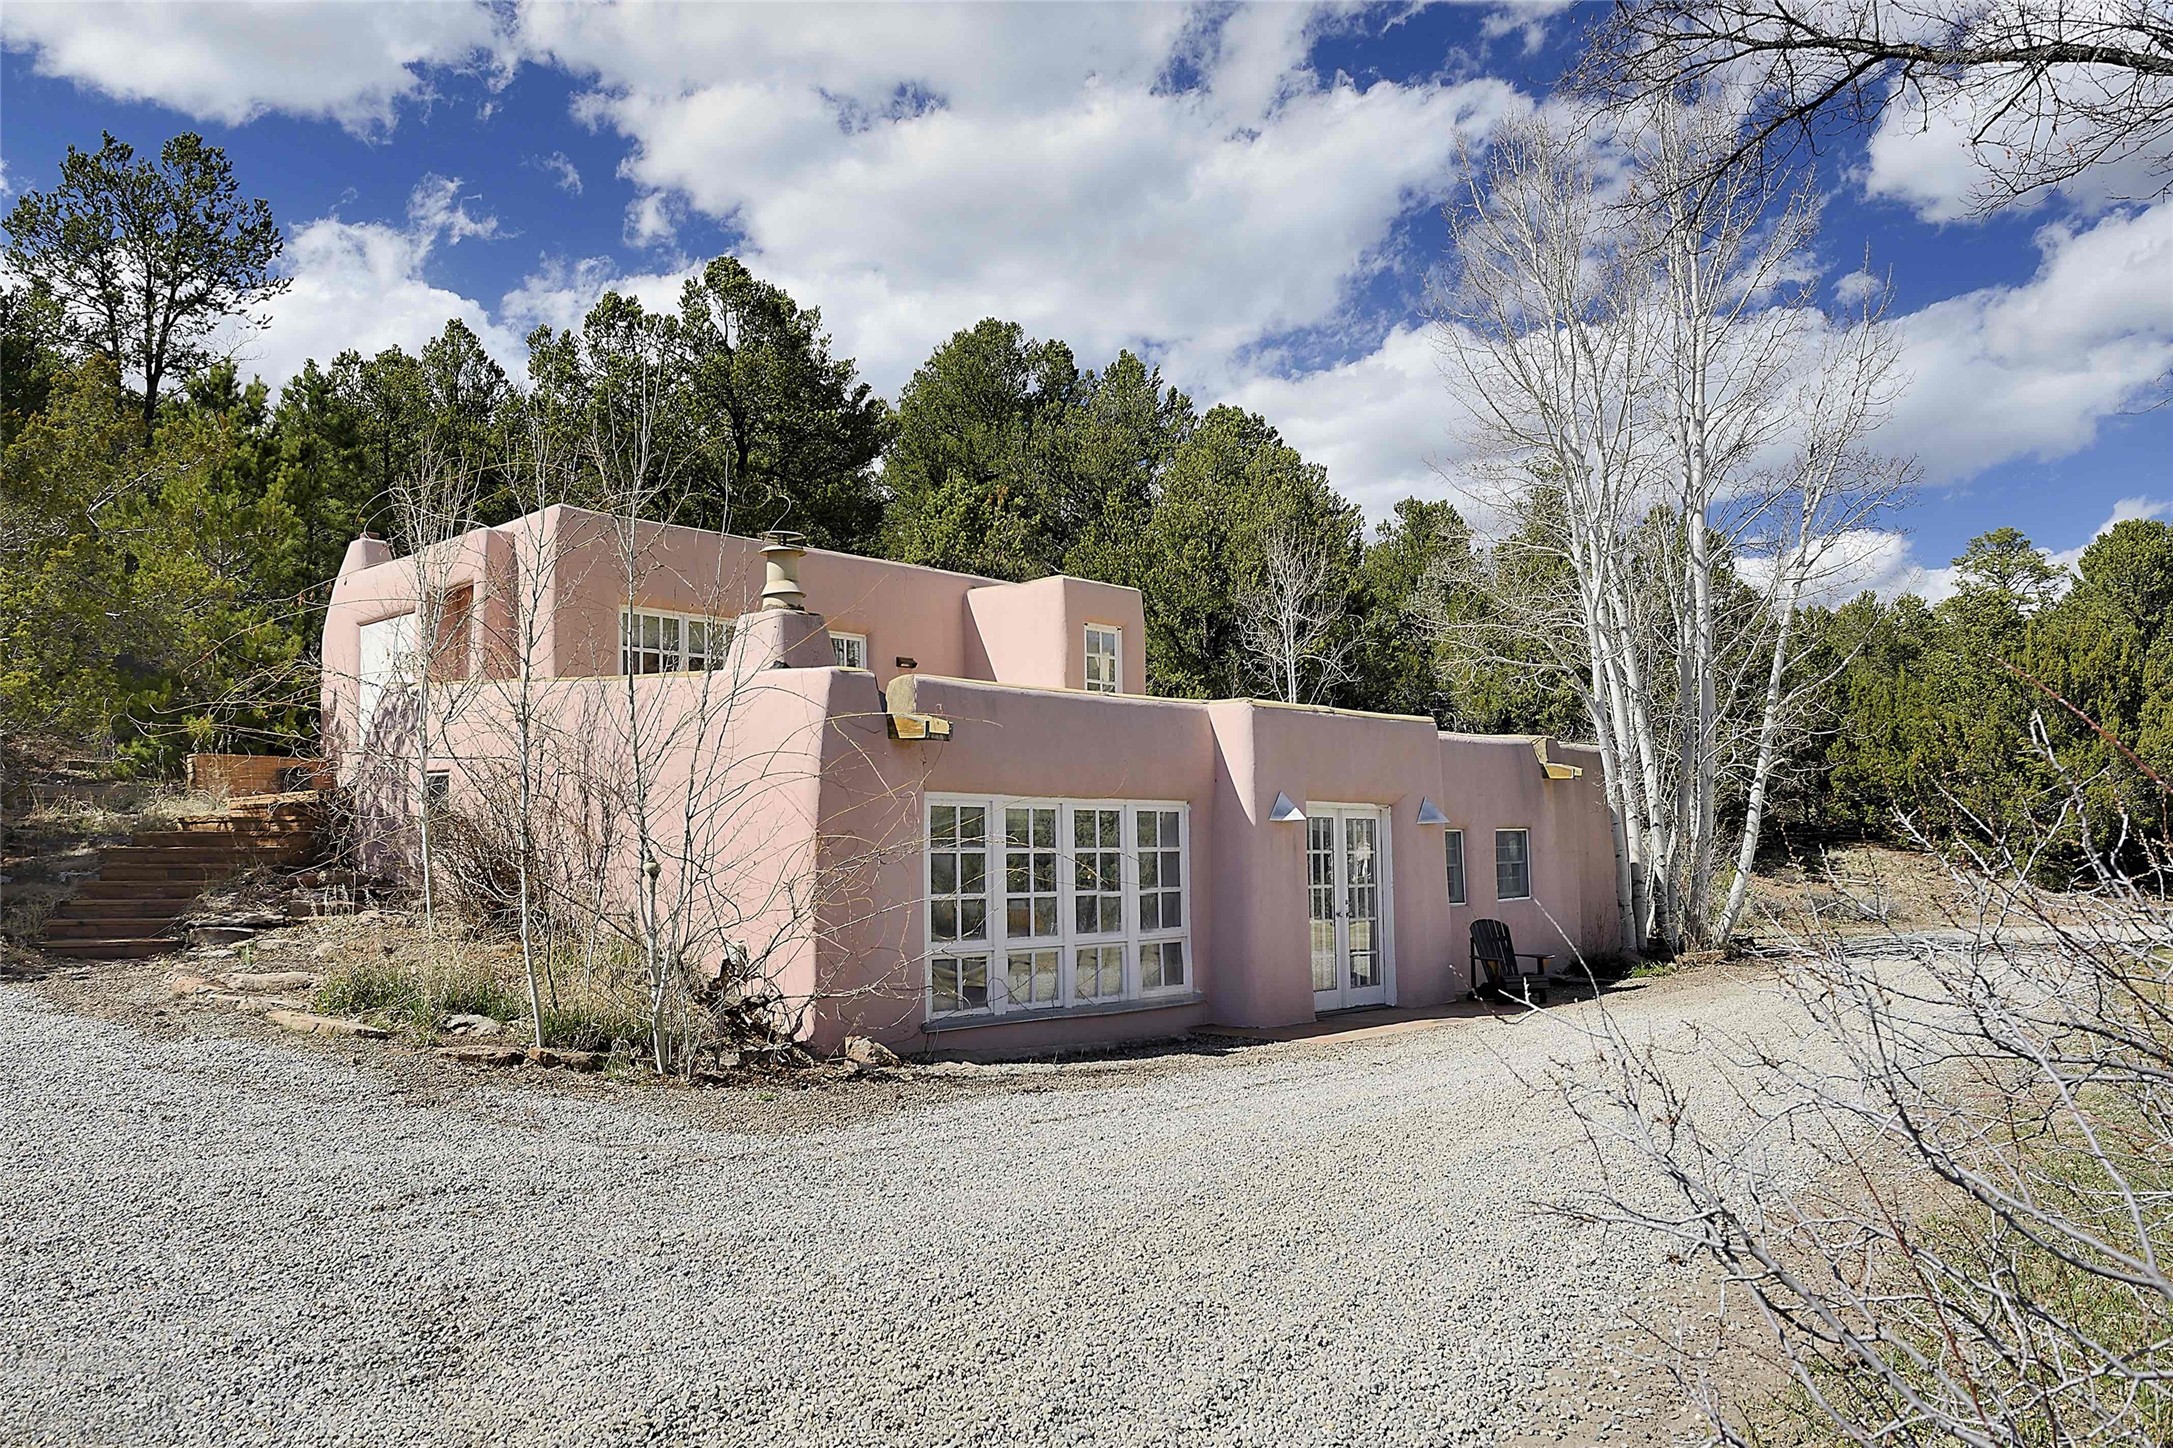 38 Johnsons Ranch, Santa Fe, New Mexico 87505, ,Farm,For Sale,38 Johnsons Ranch,202338106